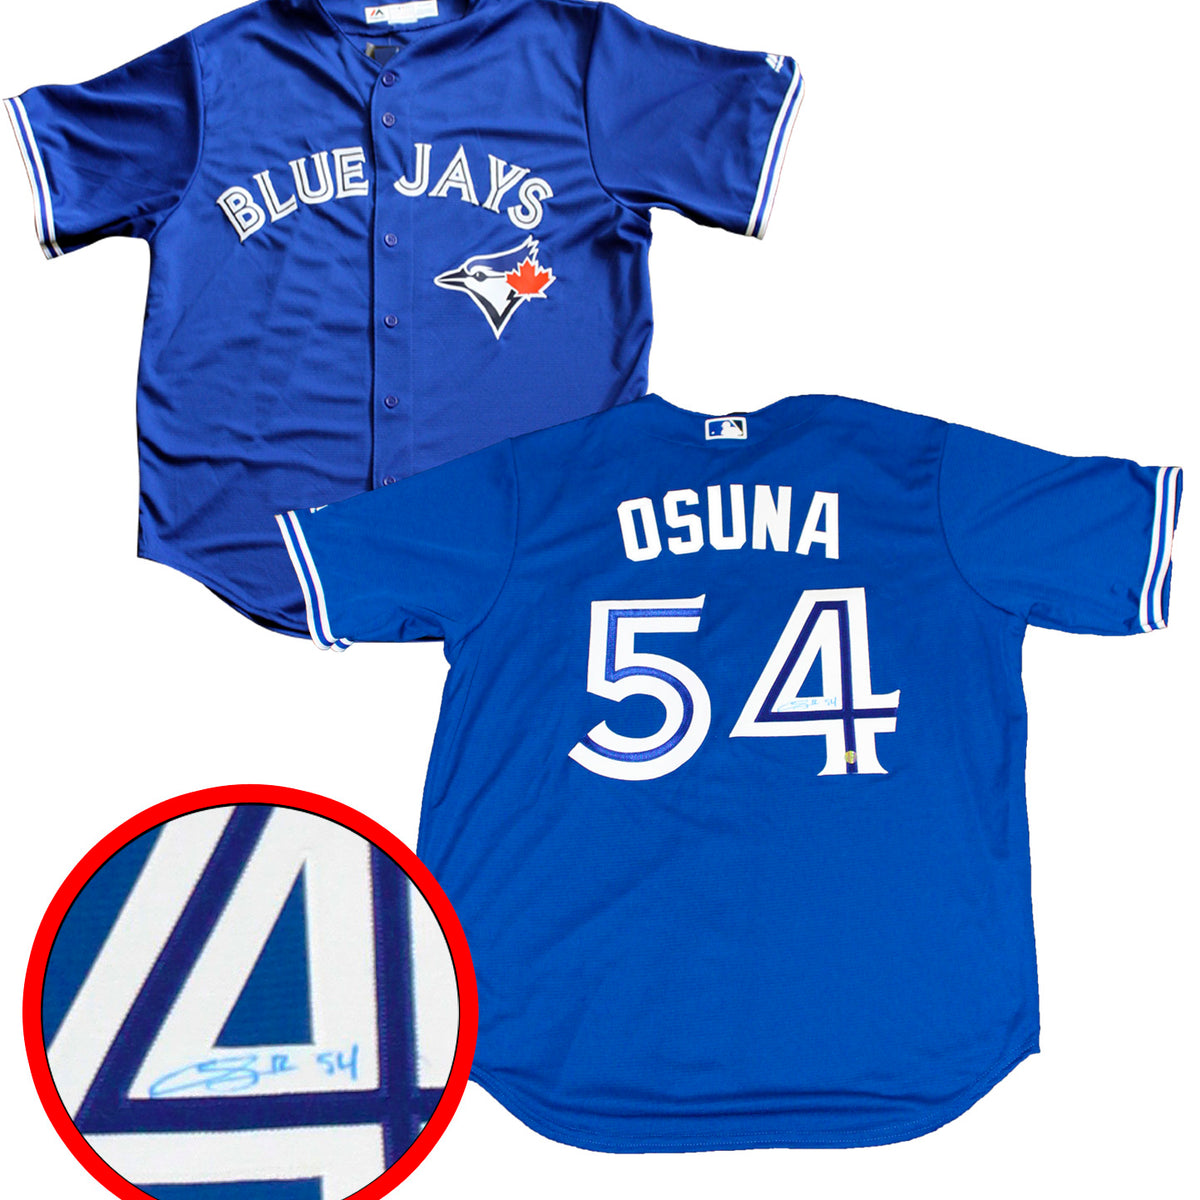 Roberto Osuna Signed Toronto Blue Jays Blue Replica Jersey